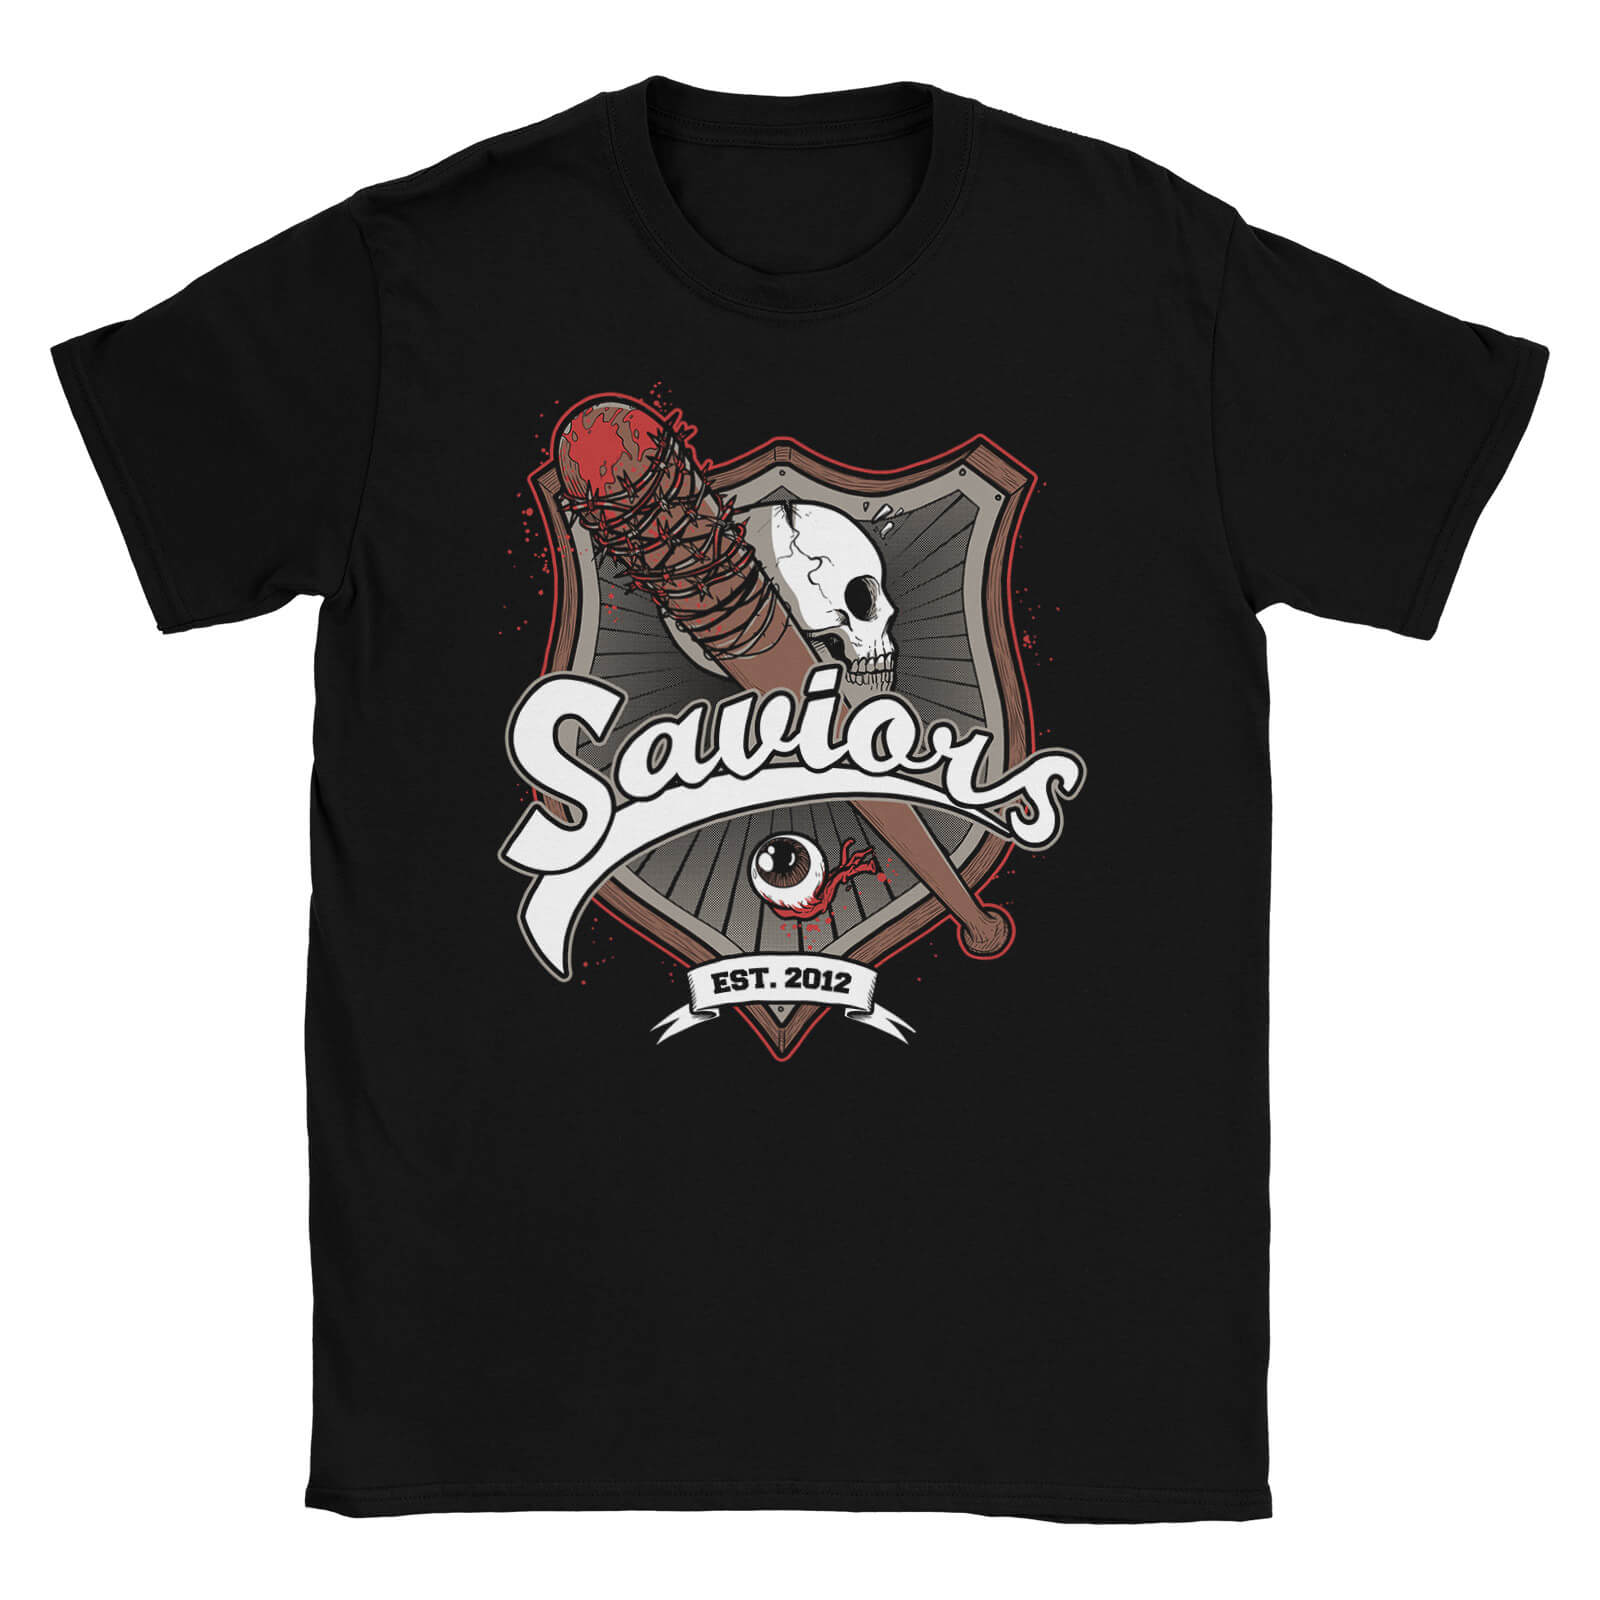 Saviors - Black T-Shirt - Unisex - XL